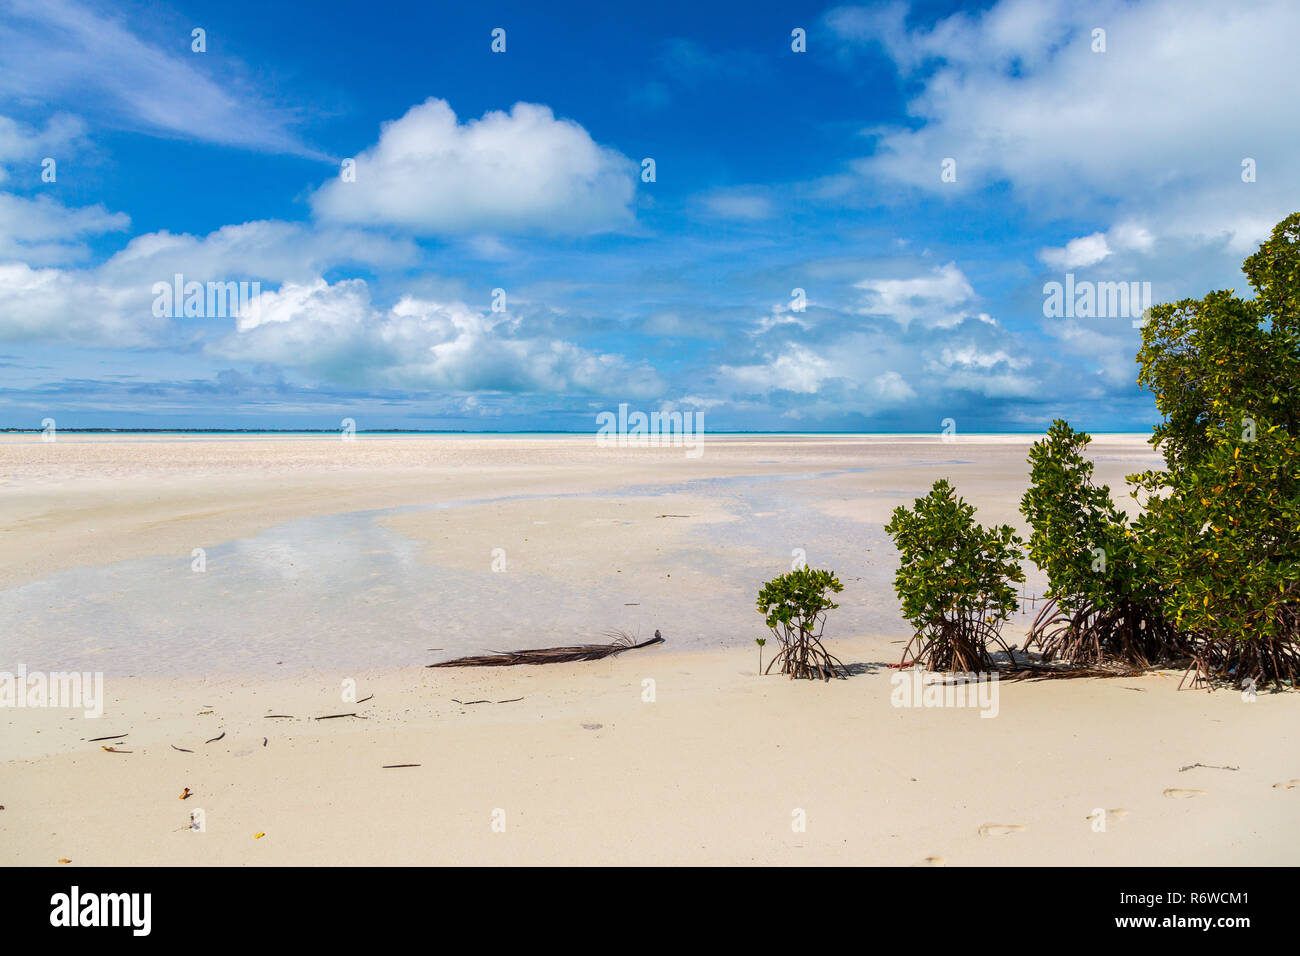 Sandy paradise beach of azure turquoise blue shallow lagoon, North Tarawa atoll, Kiribati, Gilbert Islands, Micronesia, Oceania. Palm trees, mangroves Stock Photo